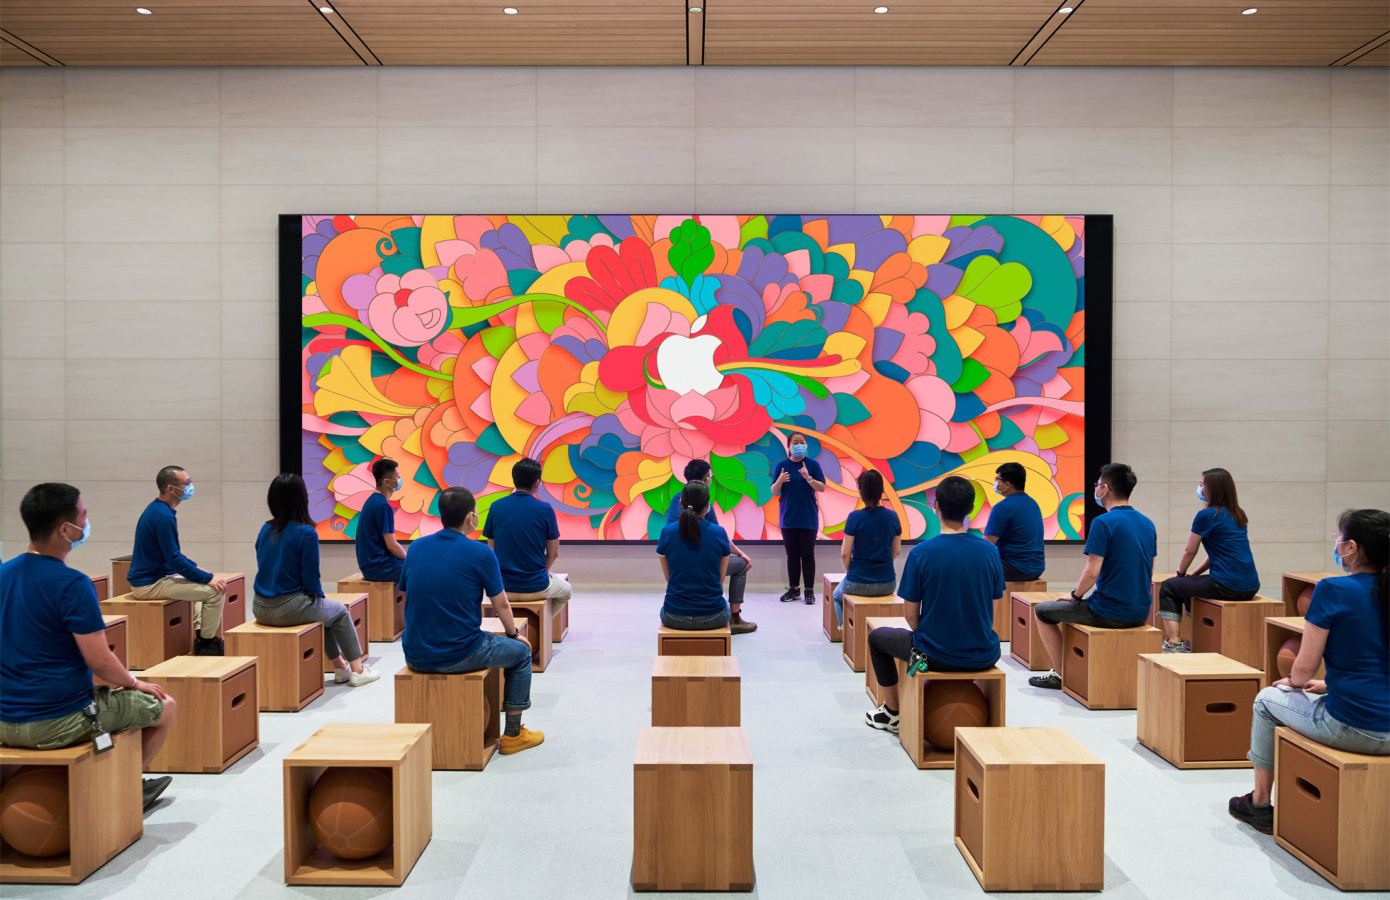 Apple opens megastore in china amid william criticism